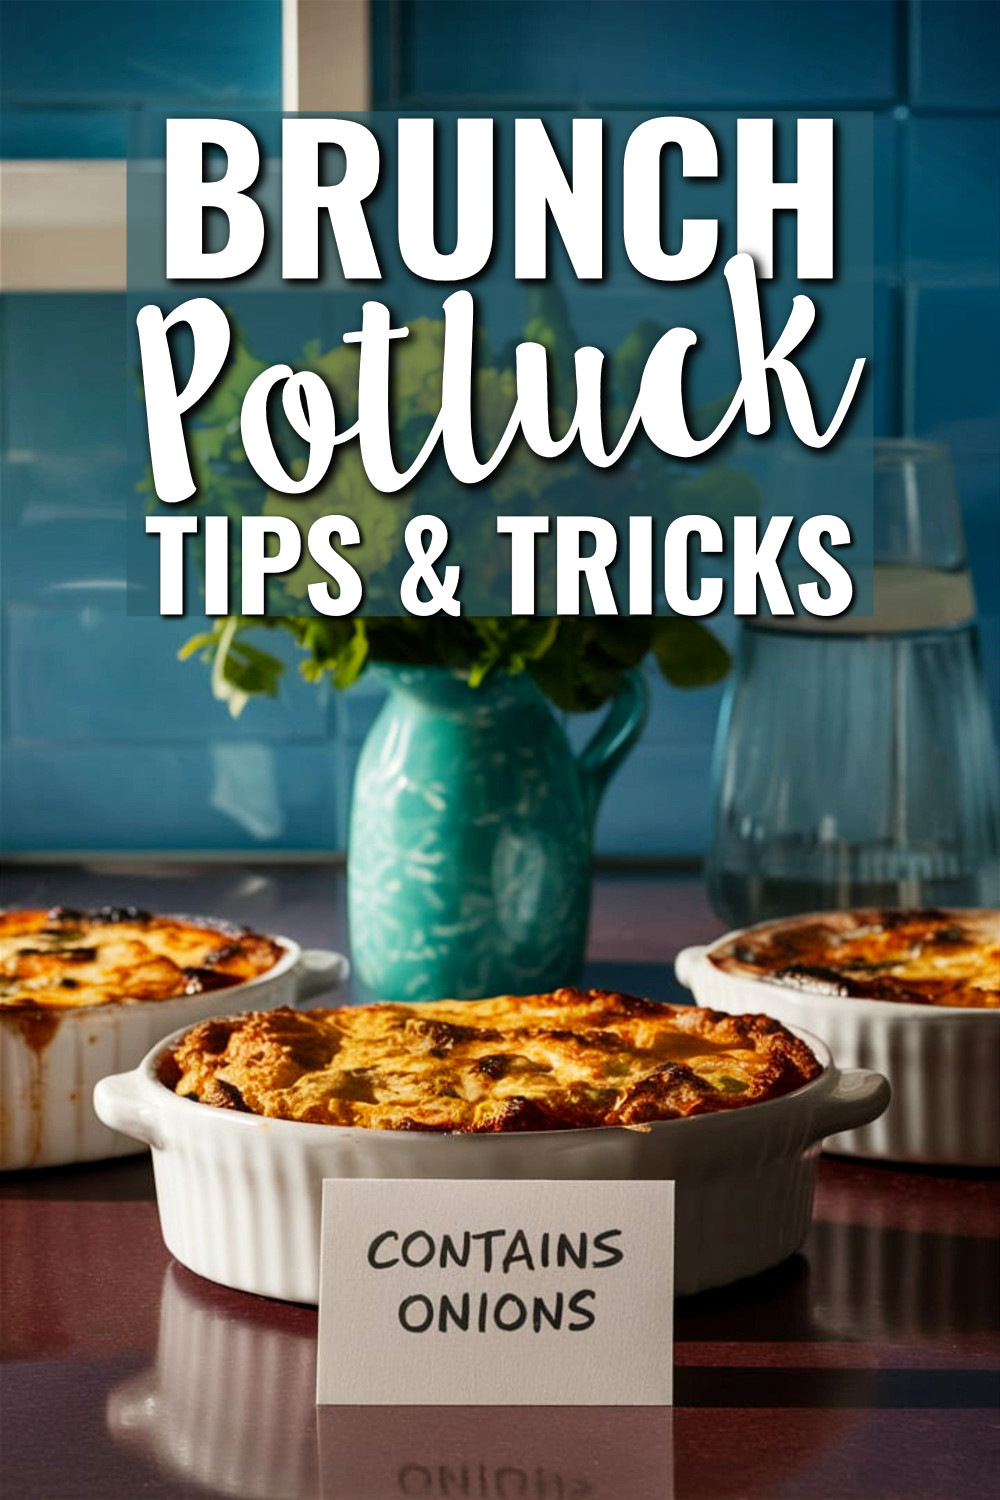 Brunch potluck tips and tricks